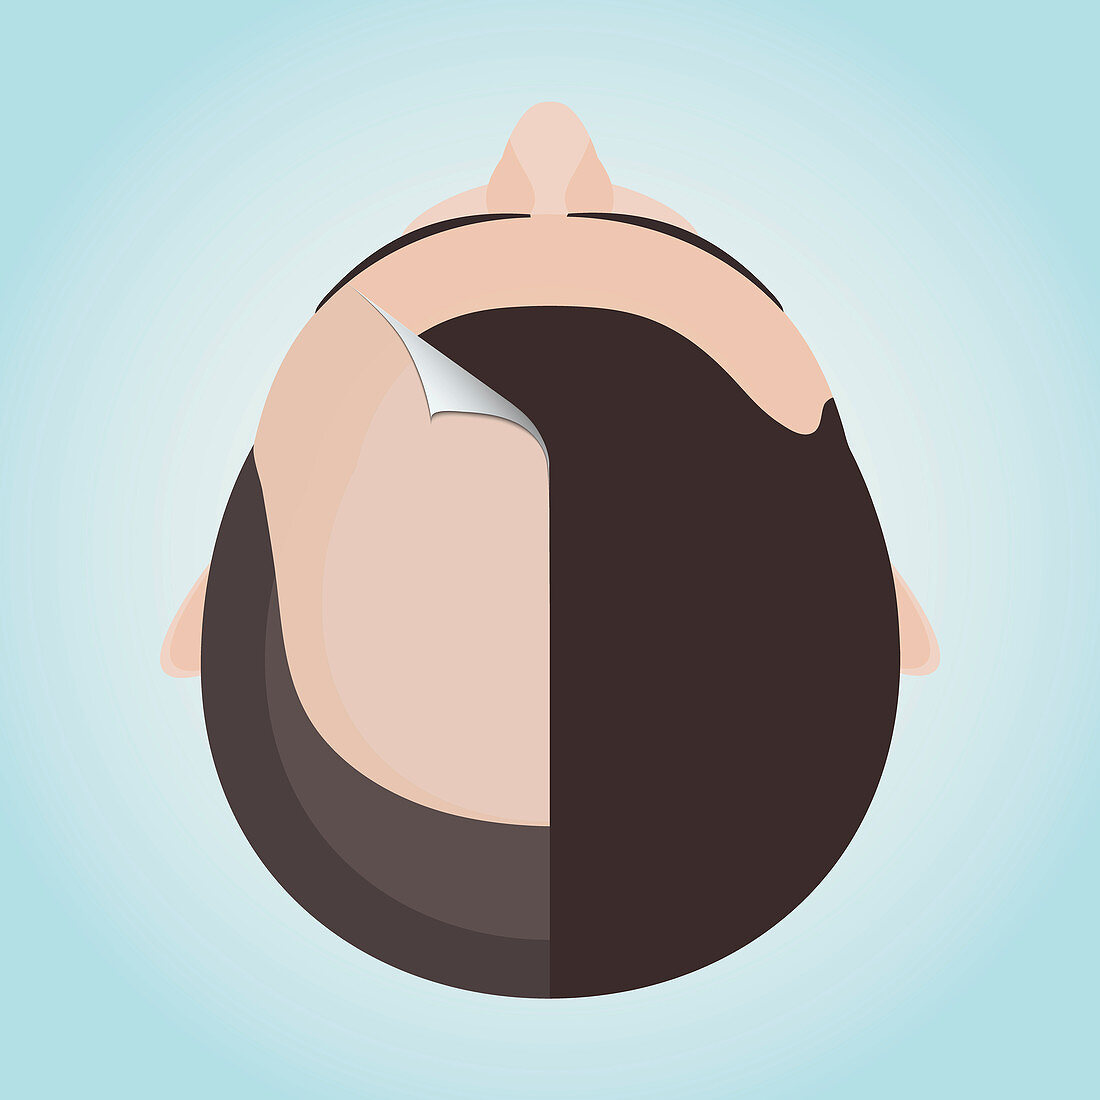 Hair loss treatment for men, conceptual illustration